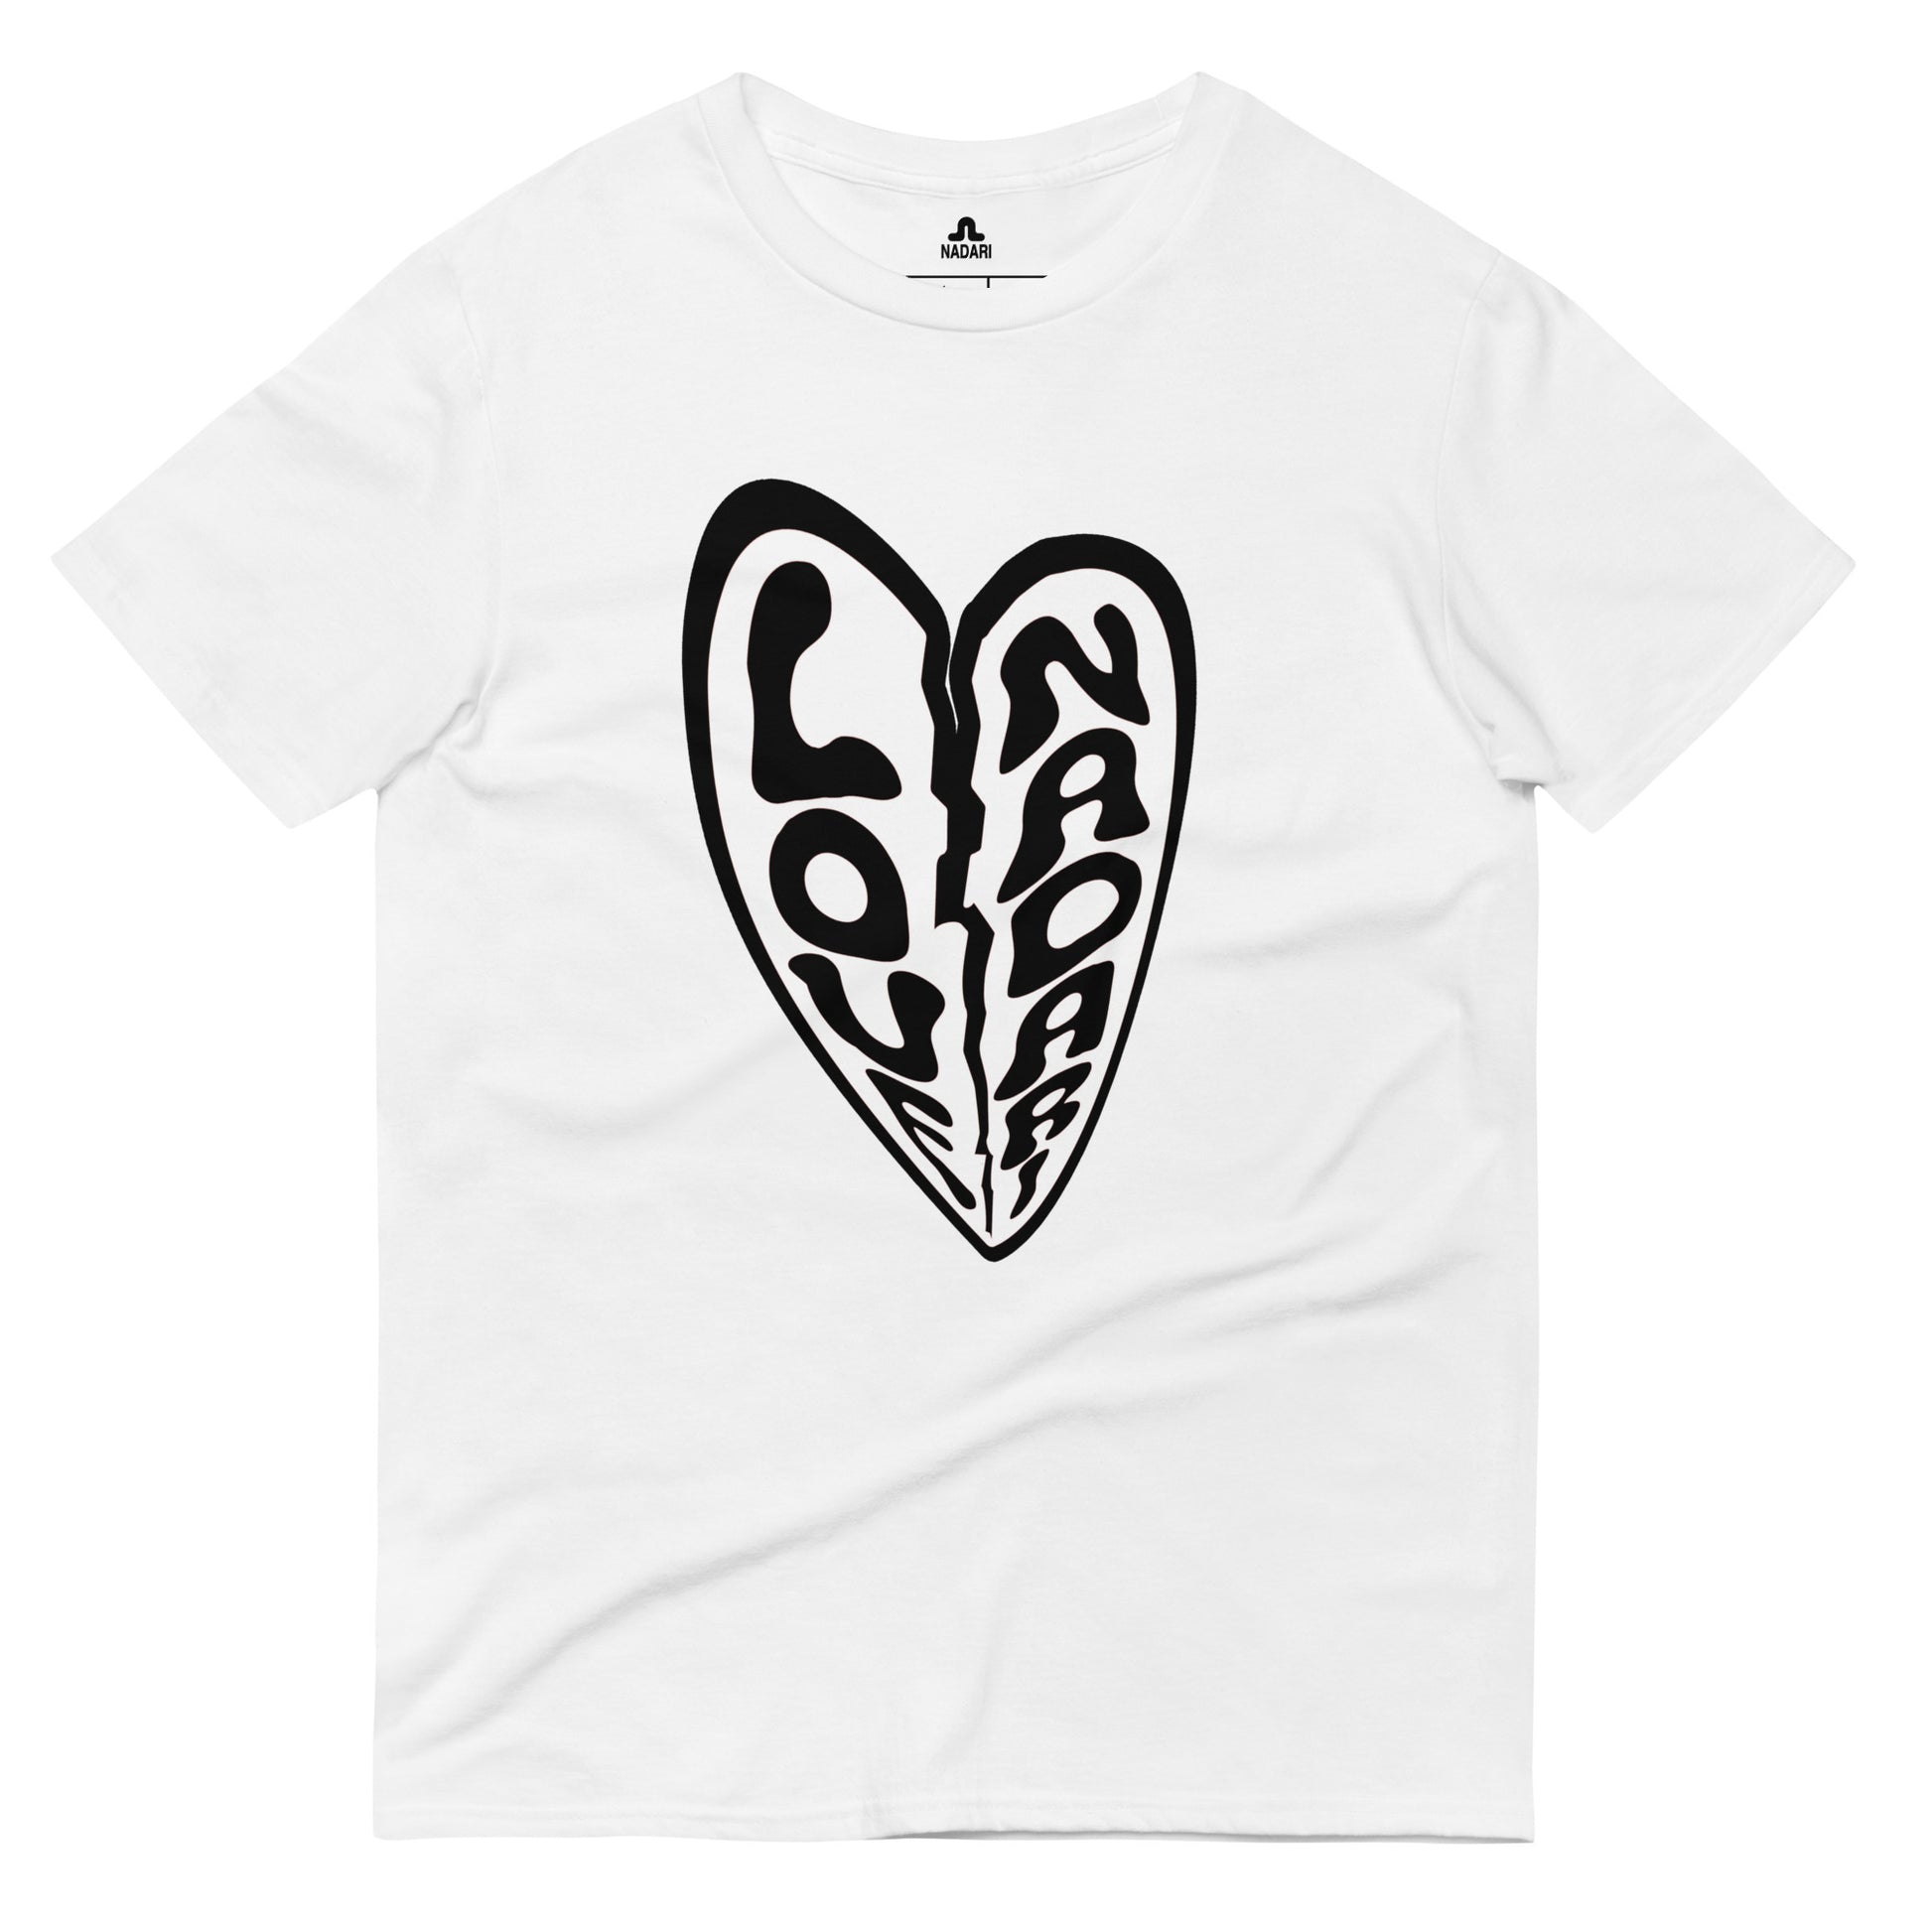 Nadari Legacy warped love t-shirt white and black.